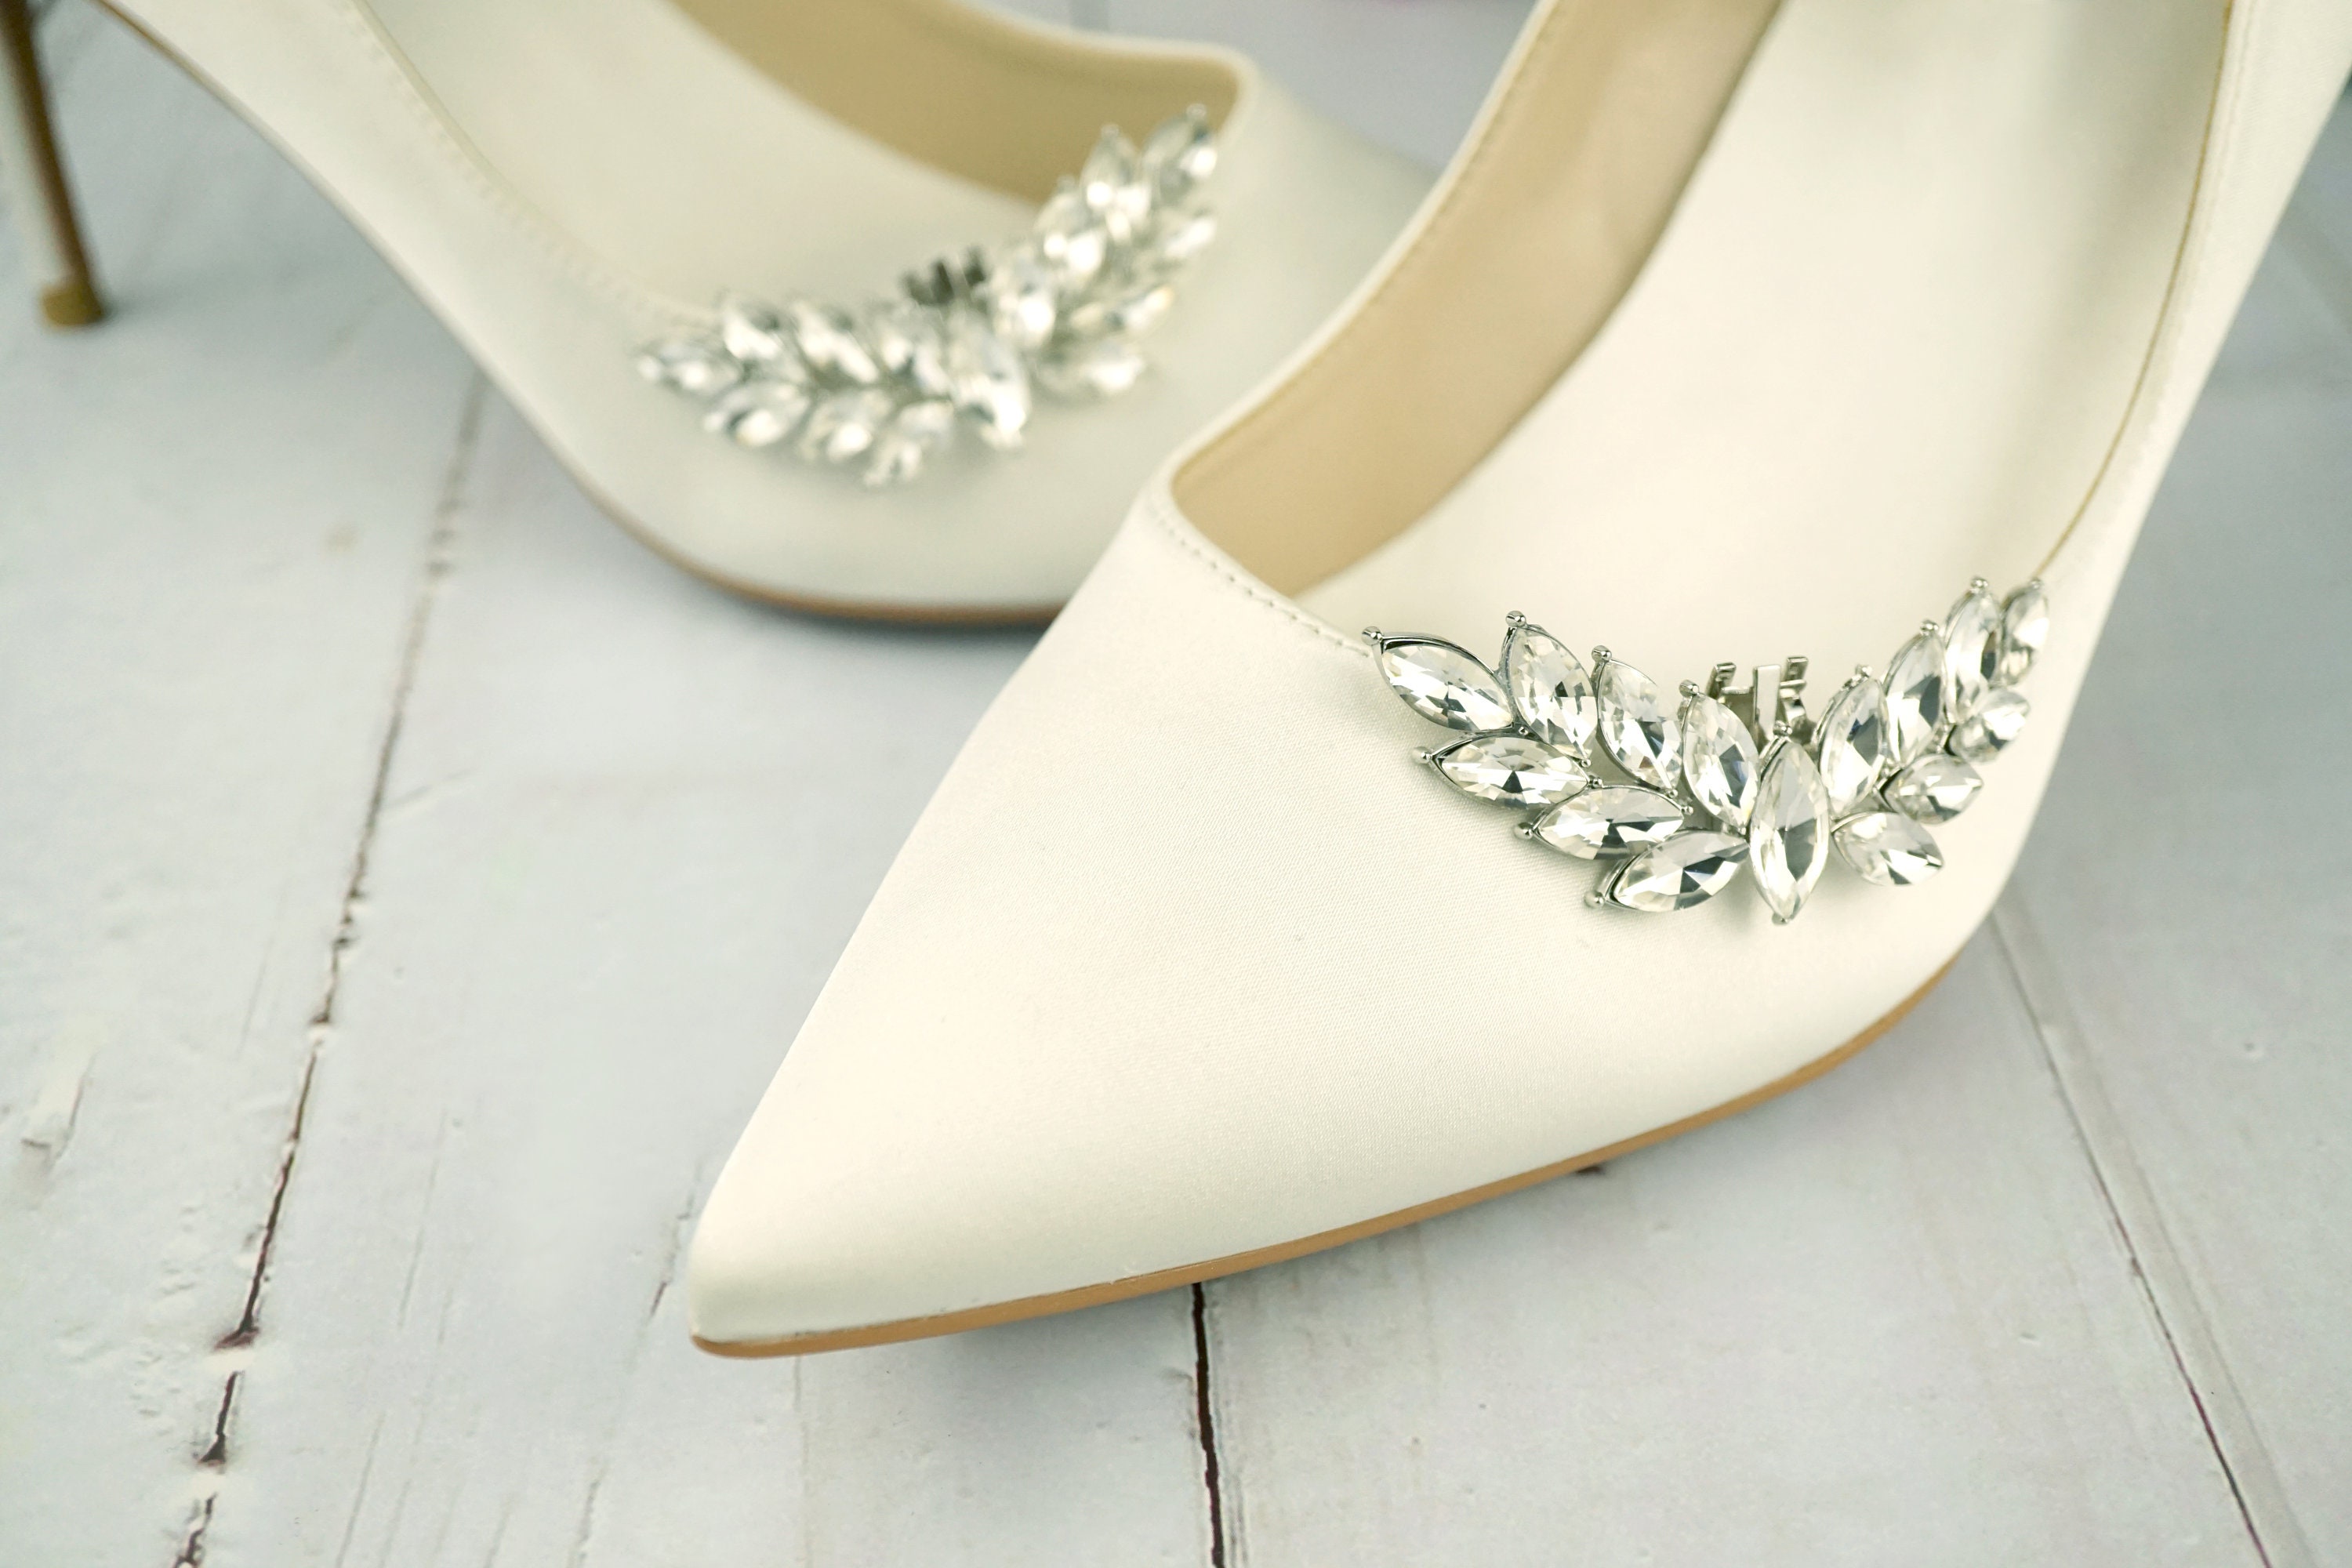 Something Blue Shoe Clips, Bridal Shoe Clips, Premium European Crystal Shoe  Embellishments Jewelry, Rhinestone Shoe Clip-on Light Blue 